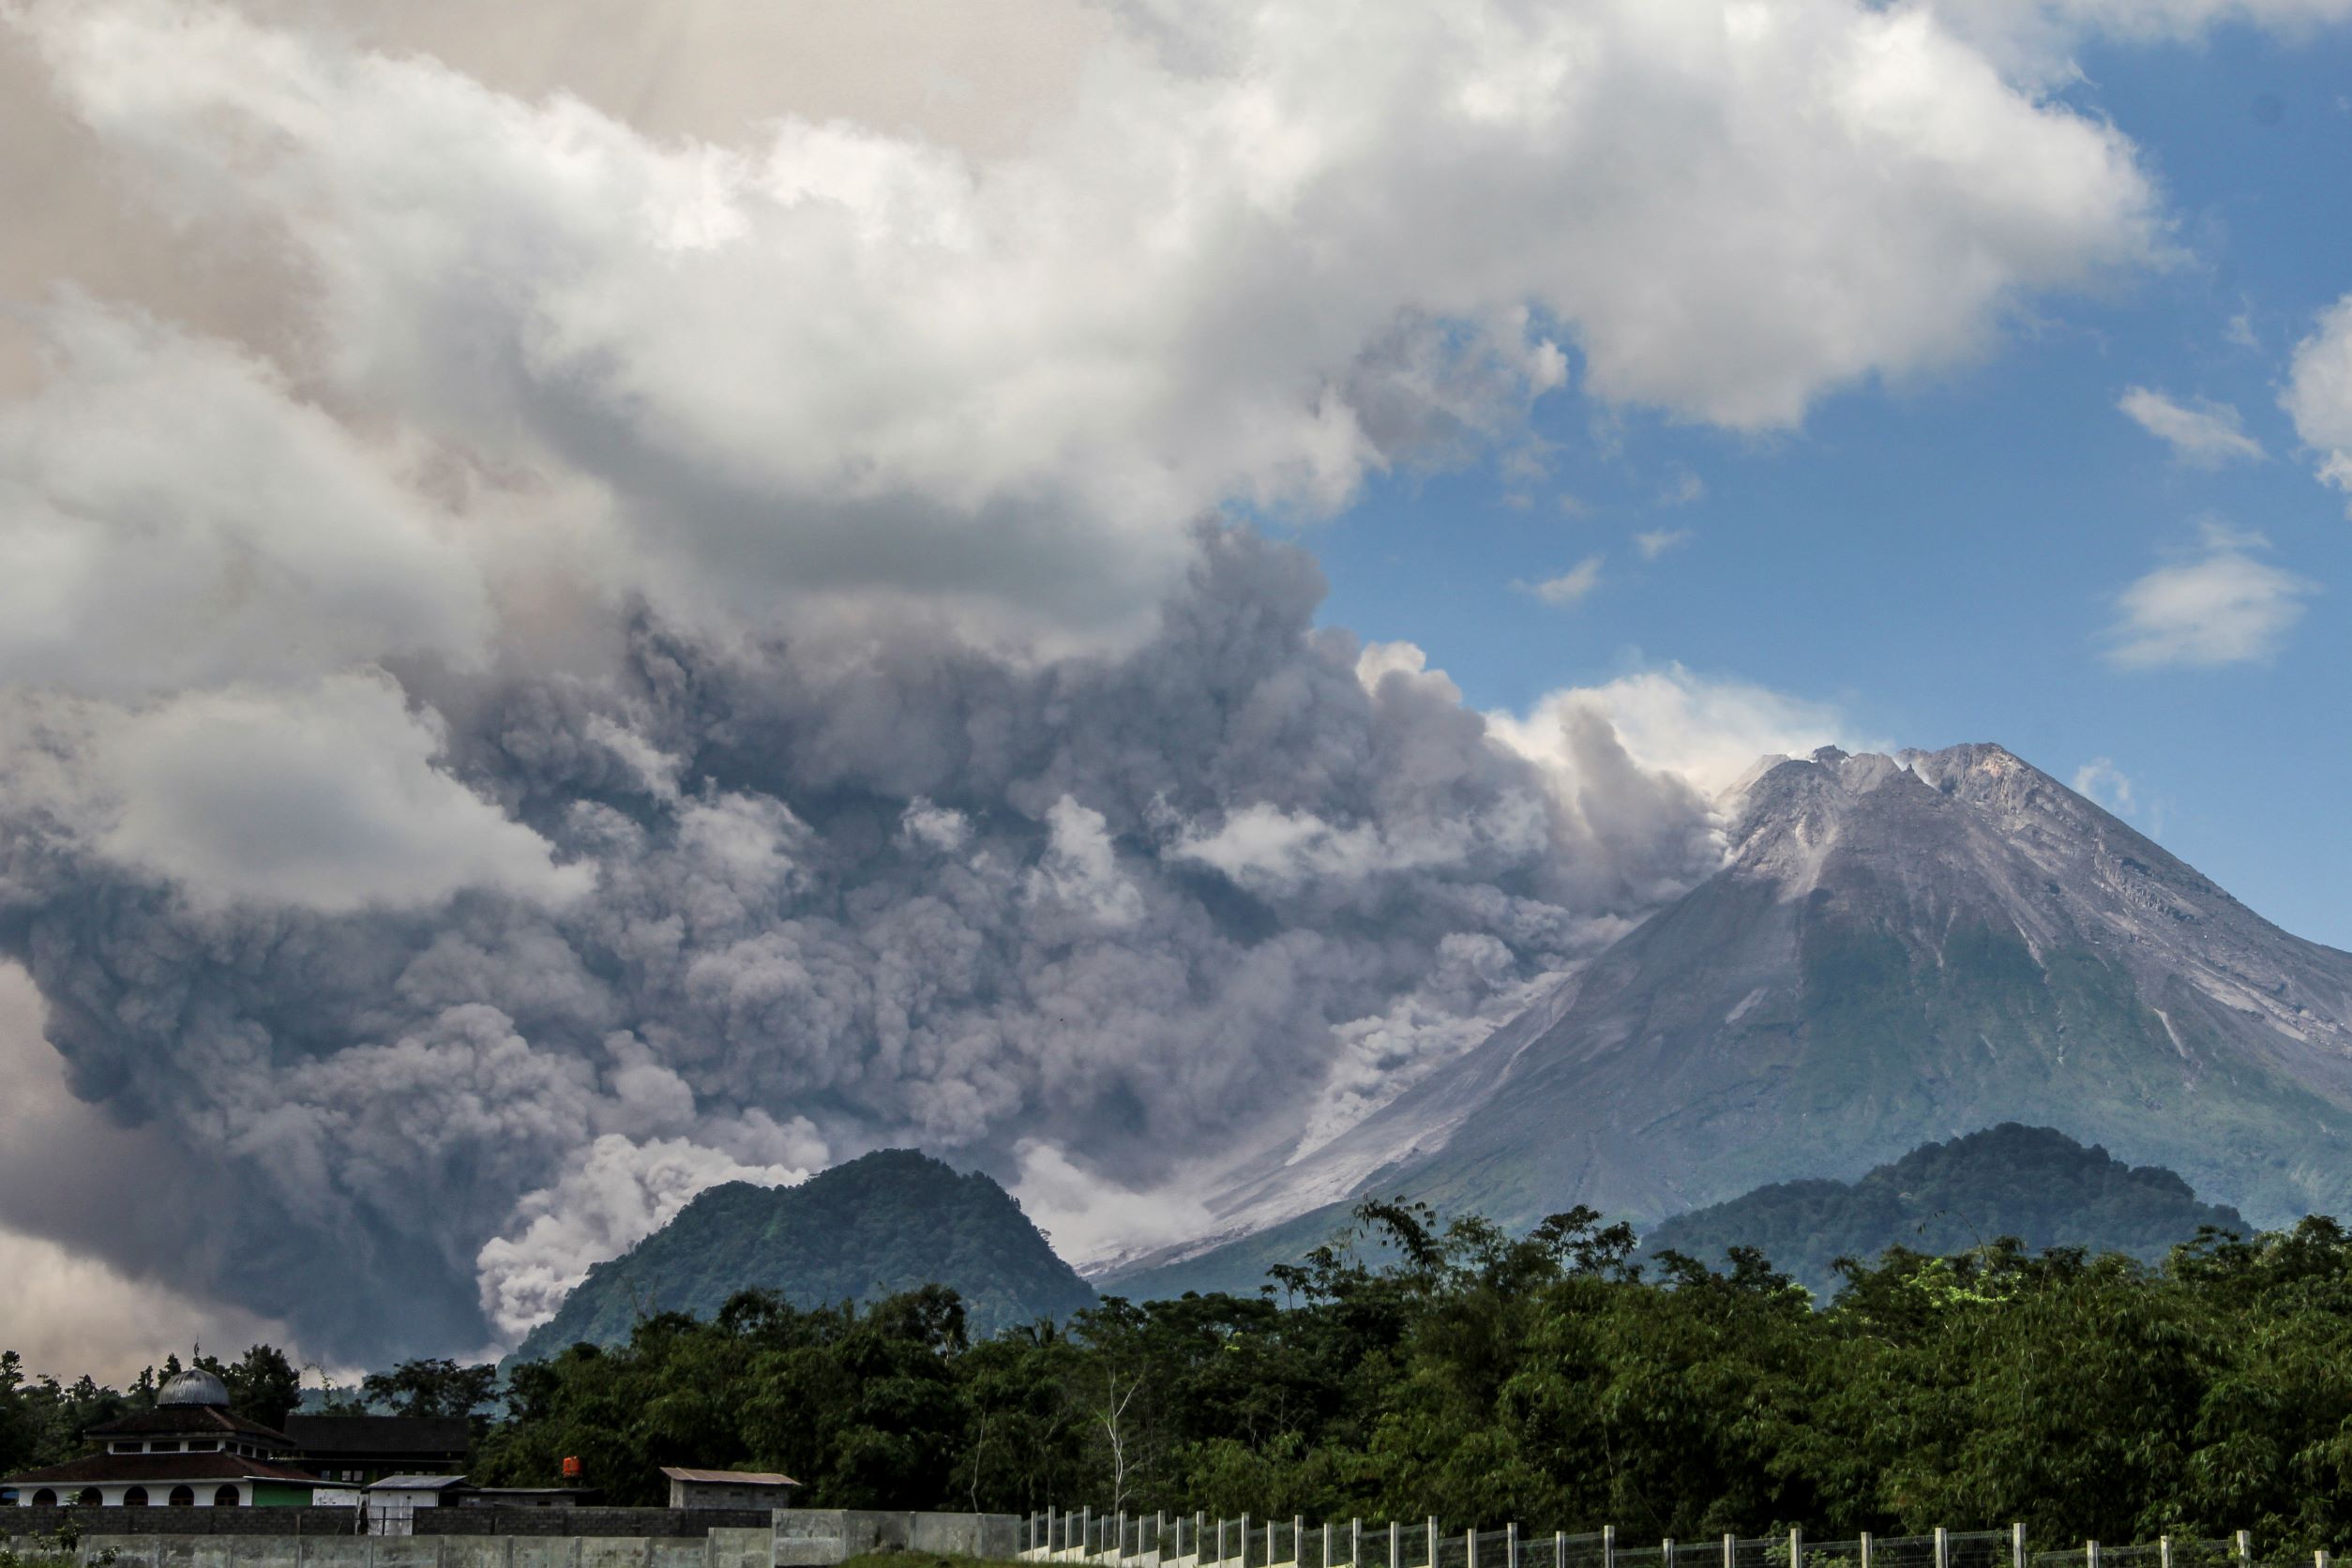 Mount Merapi releases volcanic materials